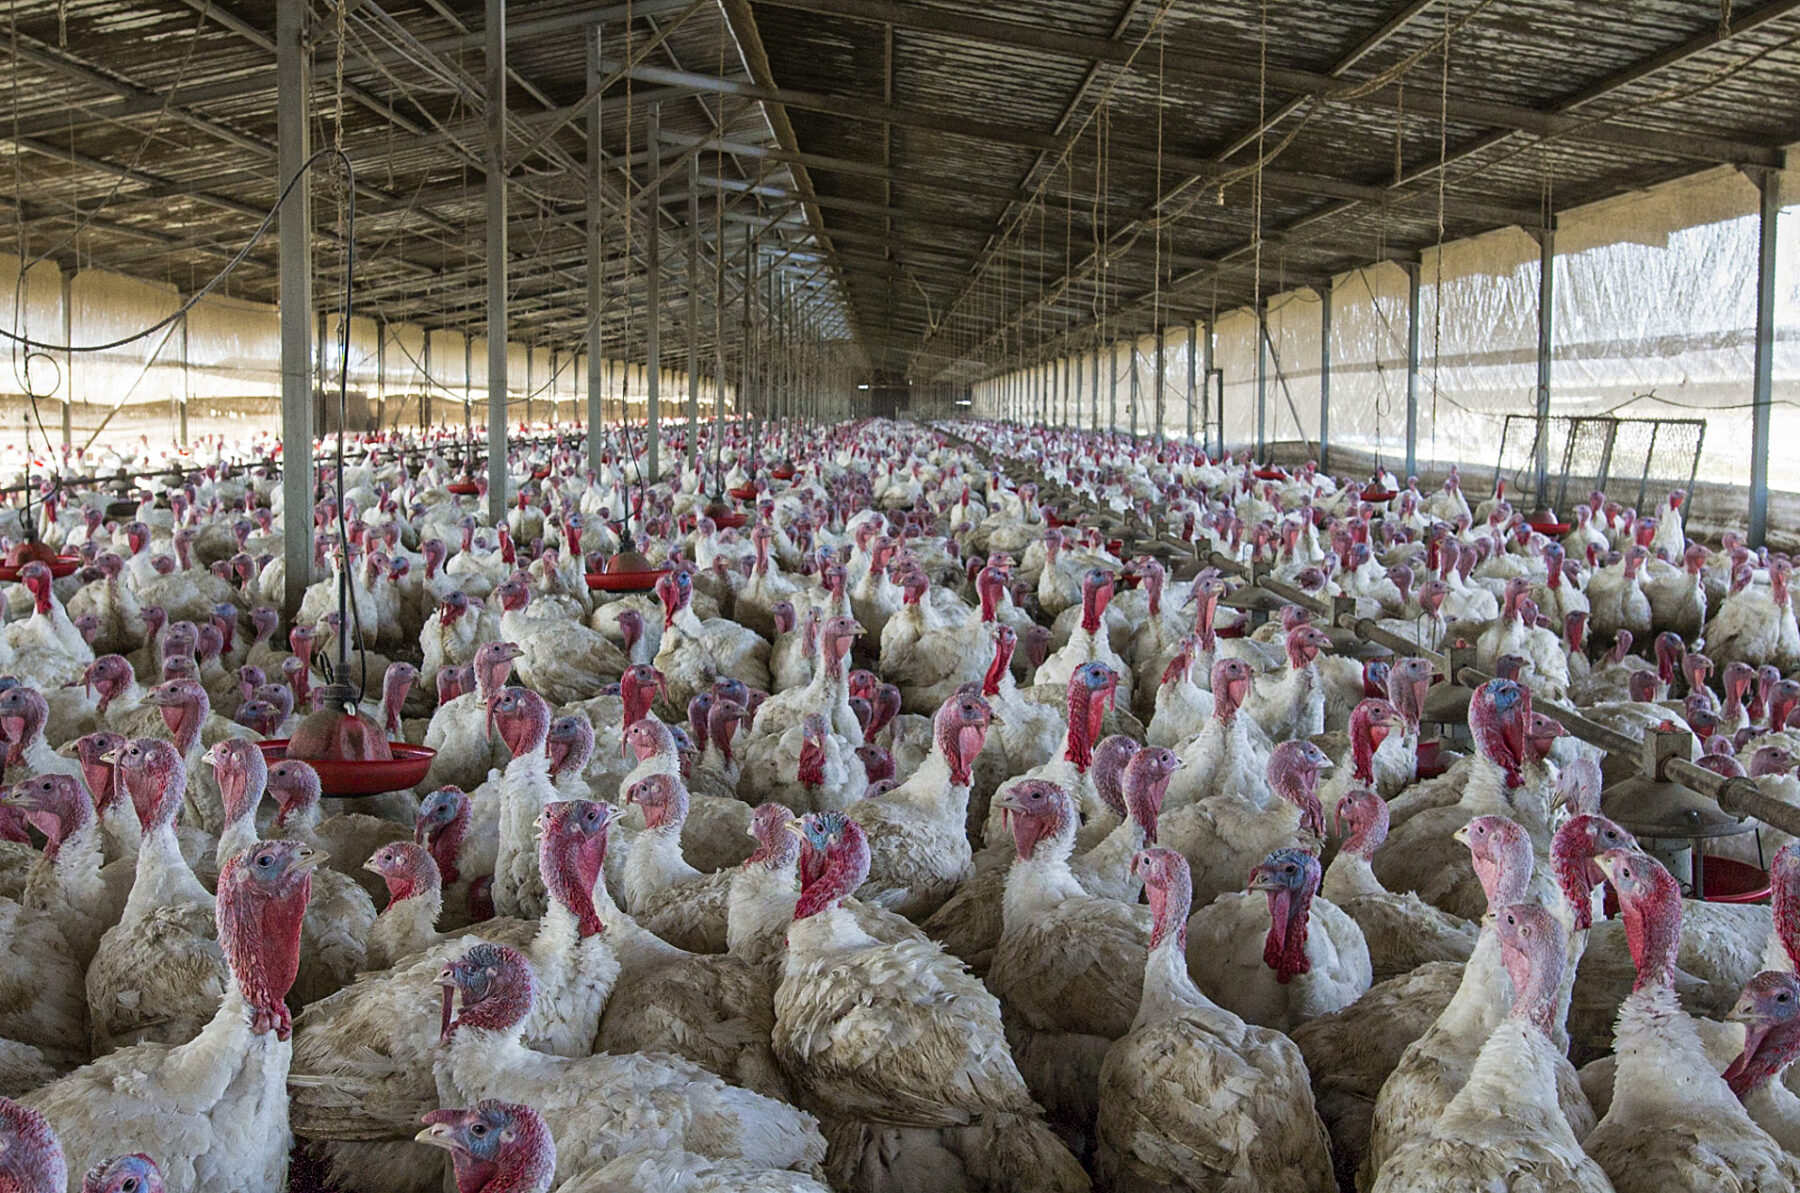 thousands of turkeys crammed in a factory farm